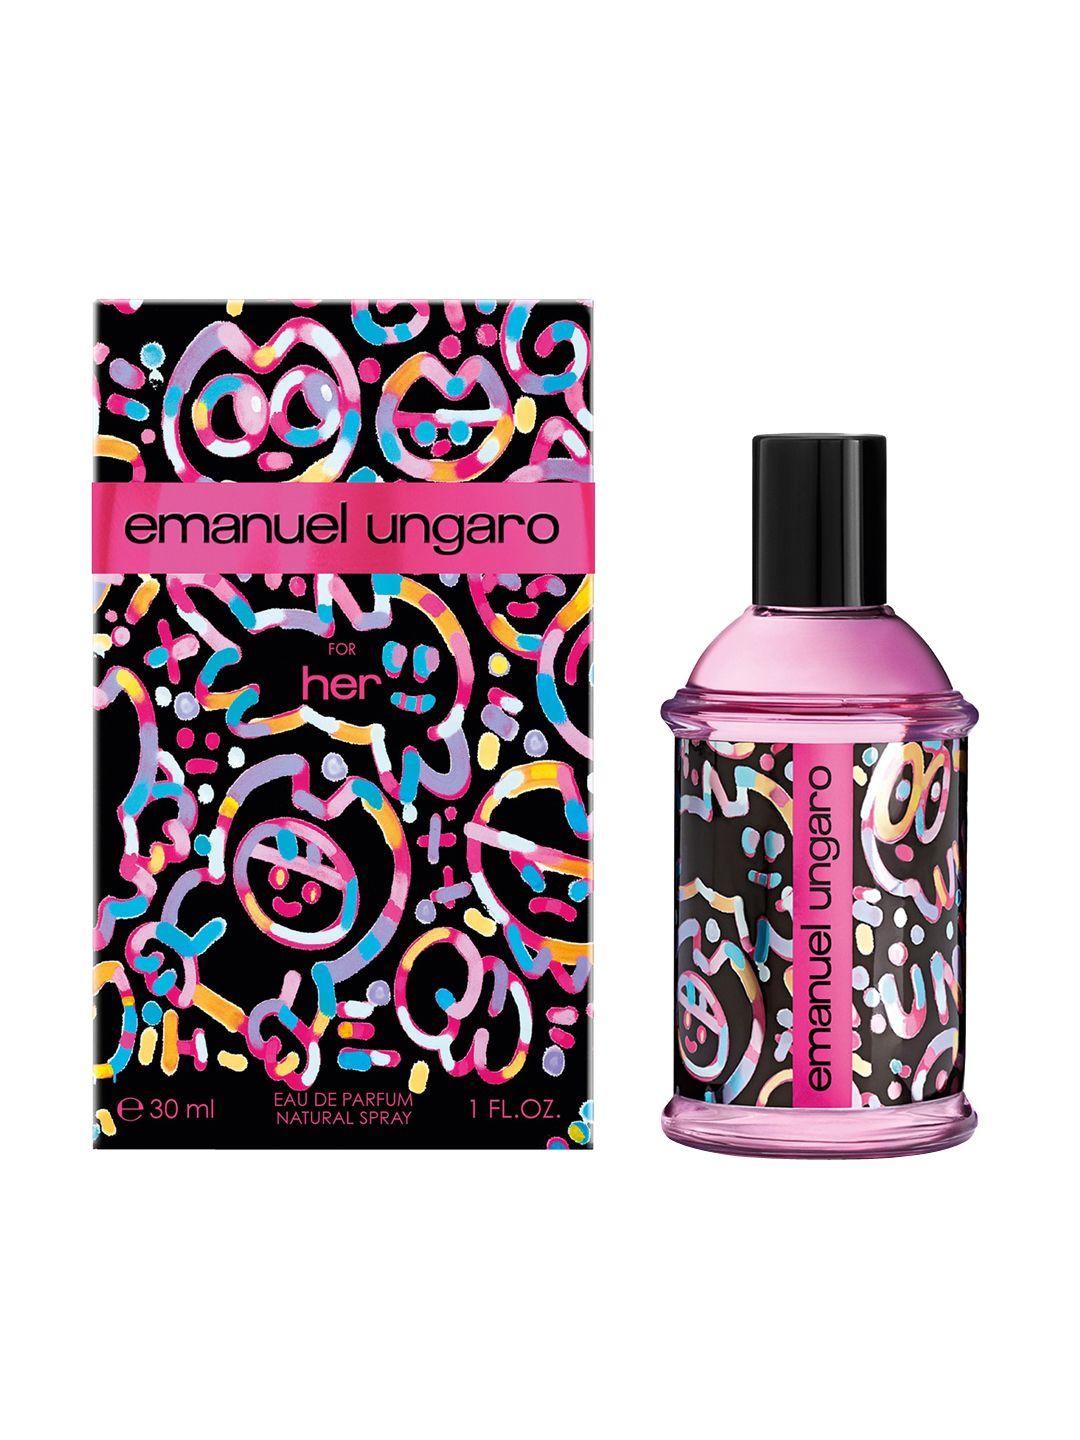 emanuel ungaro for her eau de parfum - 30ml